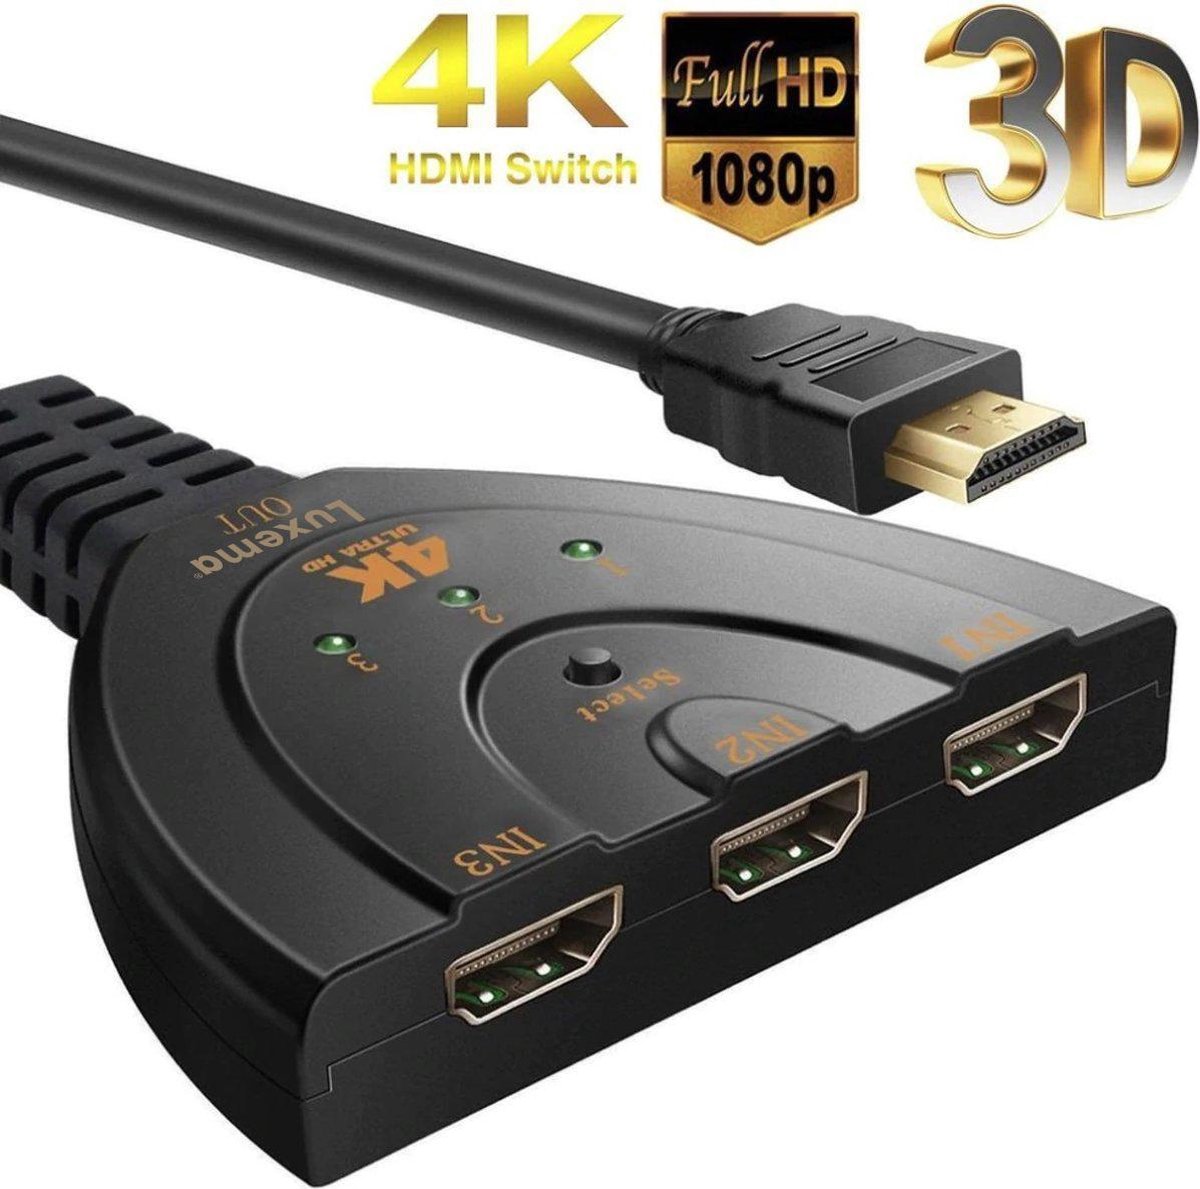 Luxema® - 4K HDMI 1.4 Splitter Switch - 3 in naar 1 uit - 4K 1080p Ultra HD - 3D - ARC - High Speed Internet 10.2Gbit/s - Playstation 5 - XBOX - Nintento - NIEUWSTE VERSIE 1.4B - Ps5 - Zwart - hdmi - hdmi switch - hdmi splitter - Cadeau